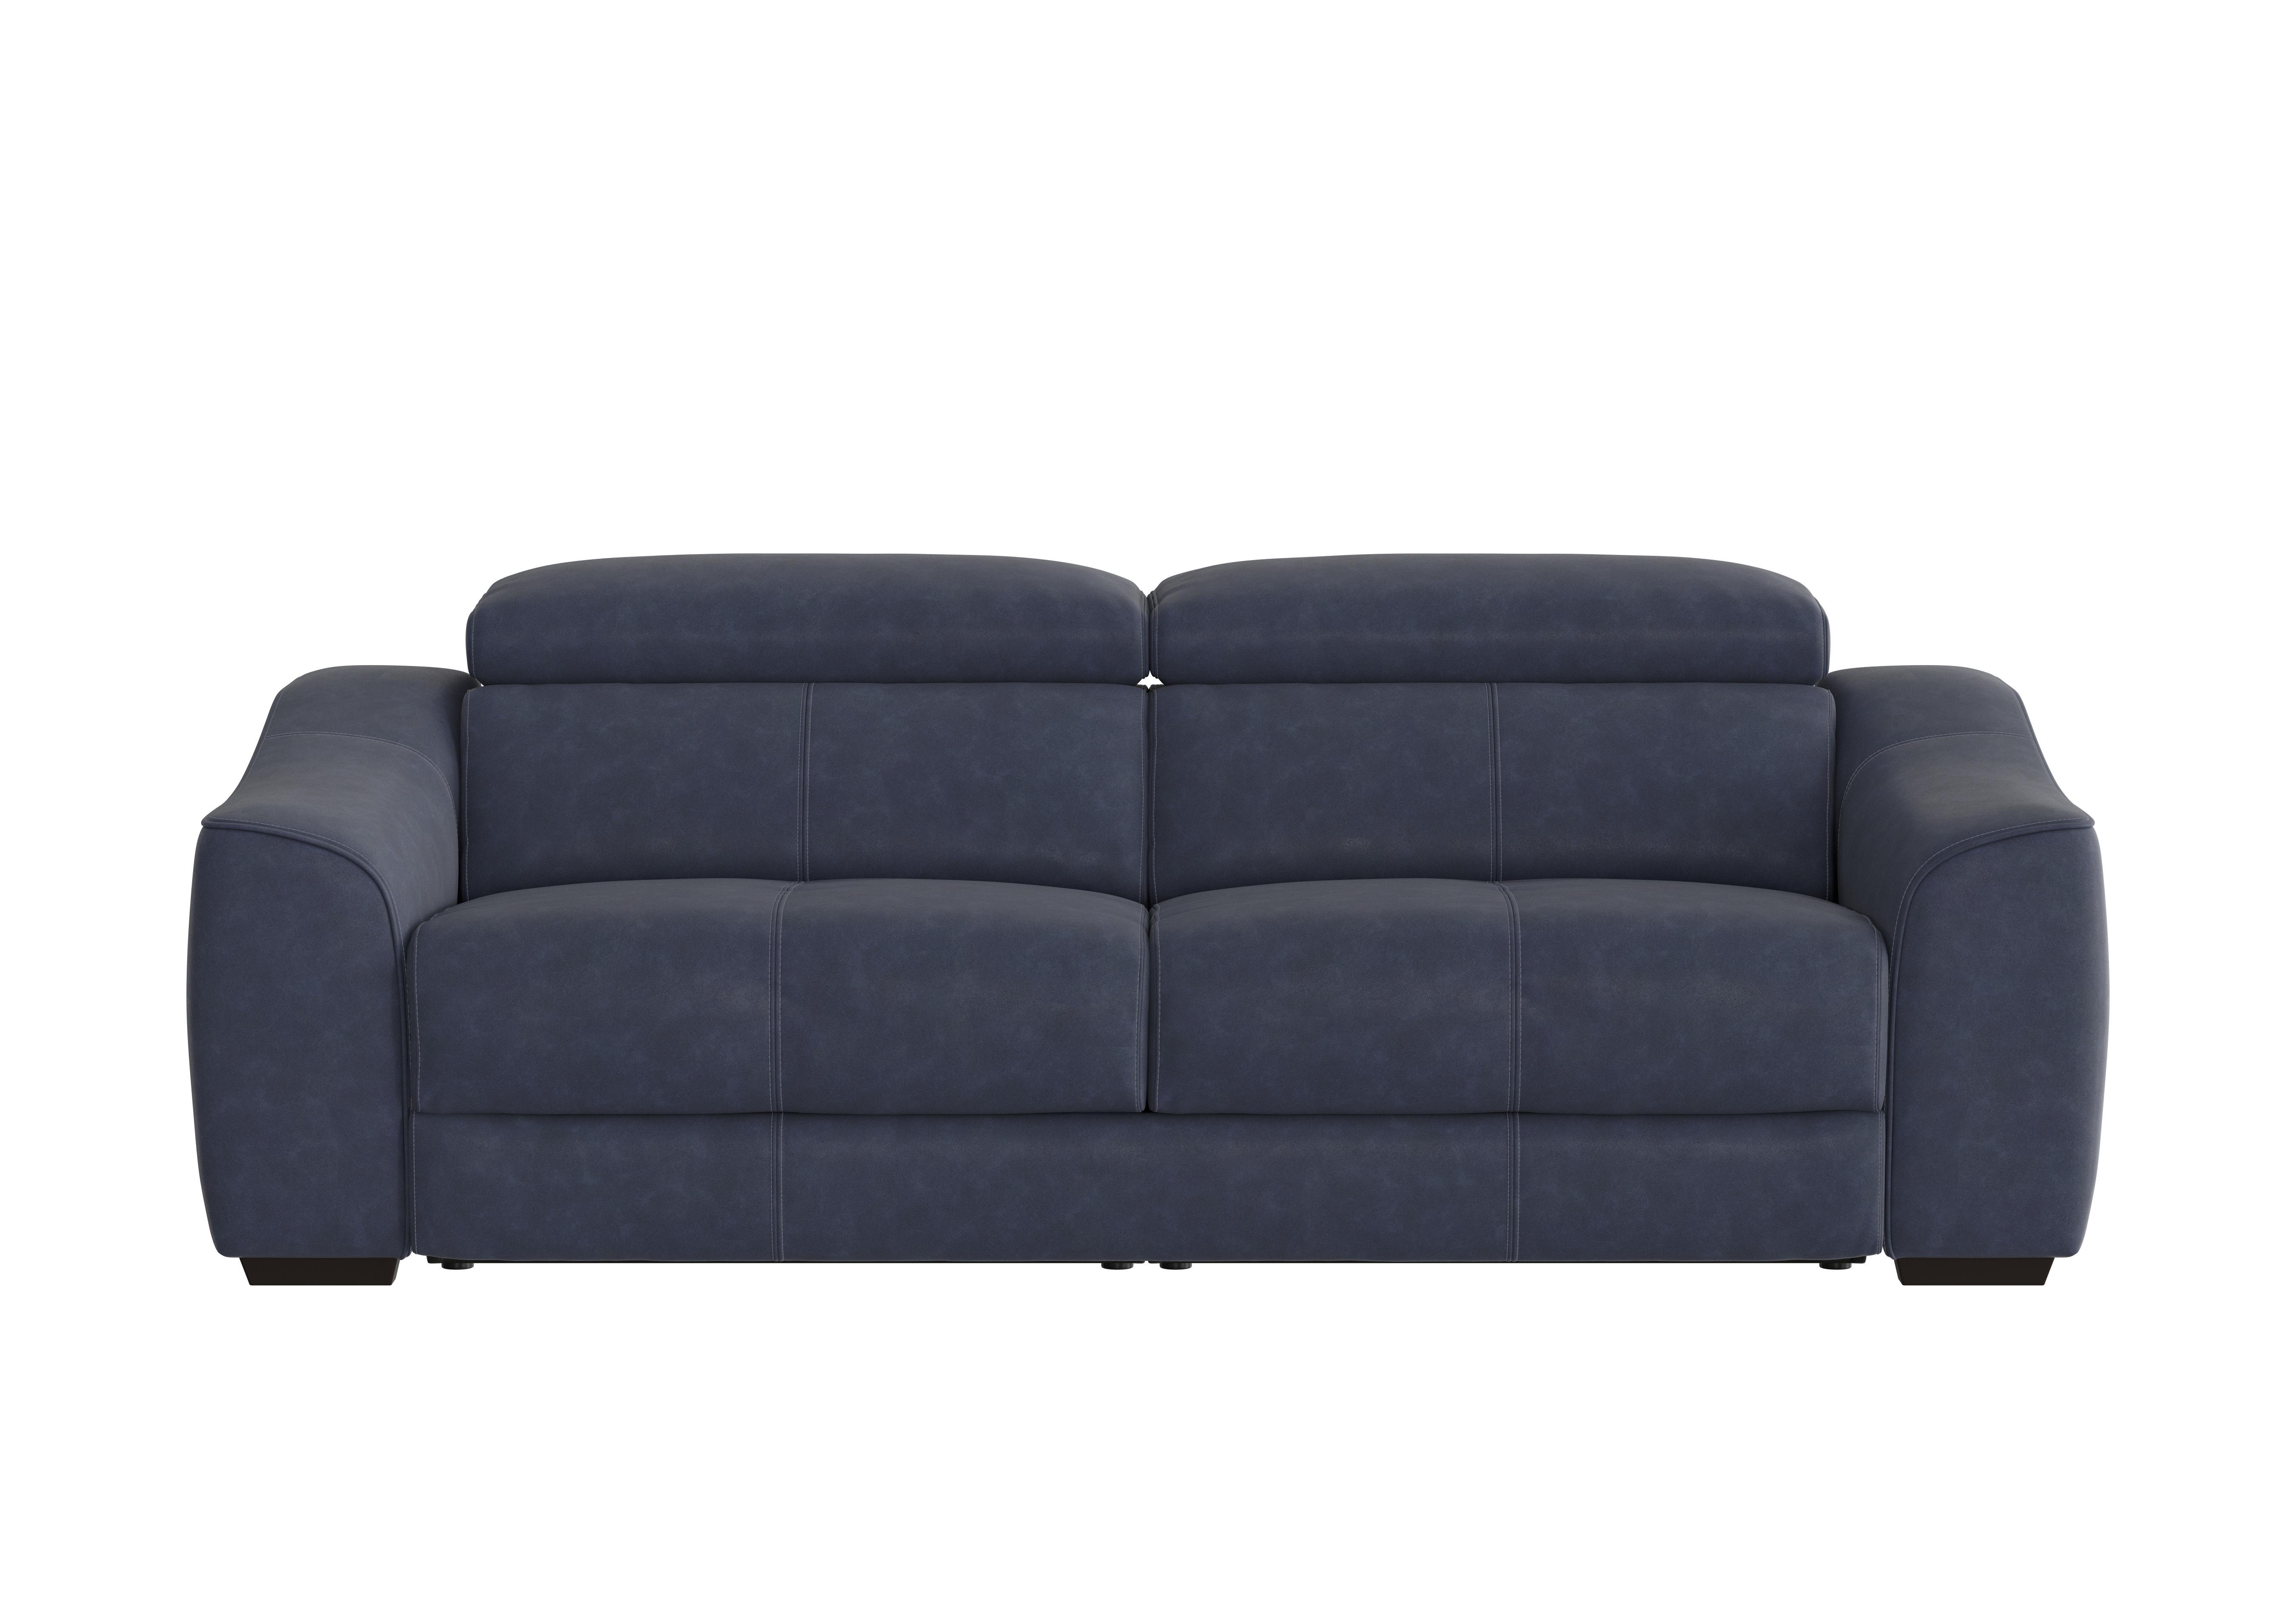 Elixir 3 Seater Fabric Sofa Bed in Bfa-Ori-R23 Blue on Furniture Village